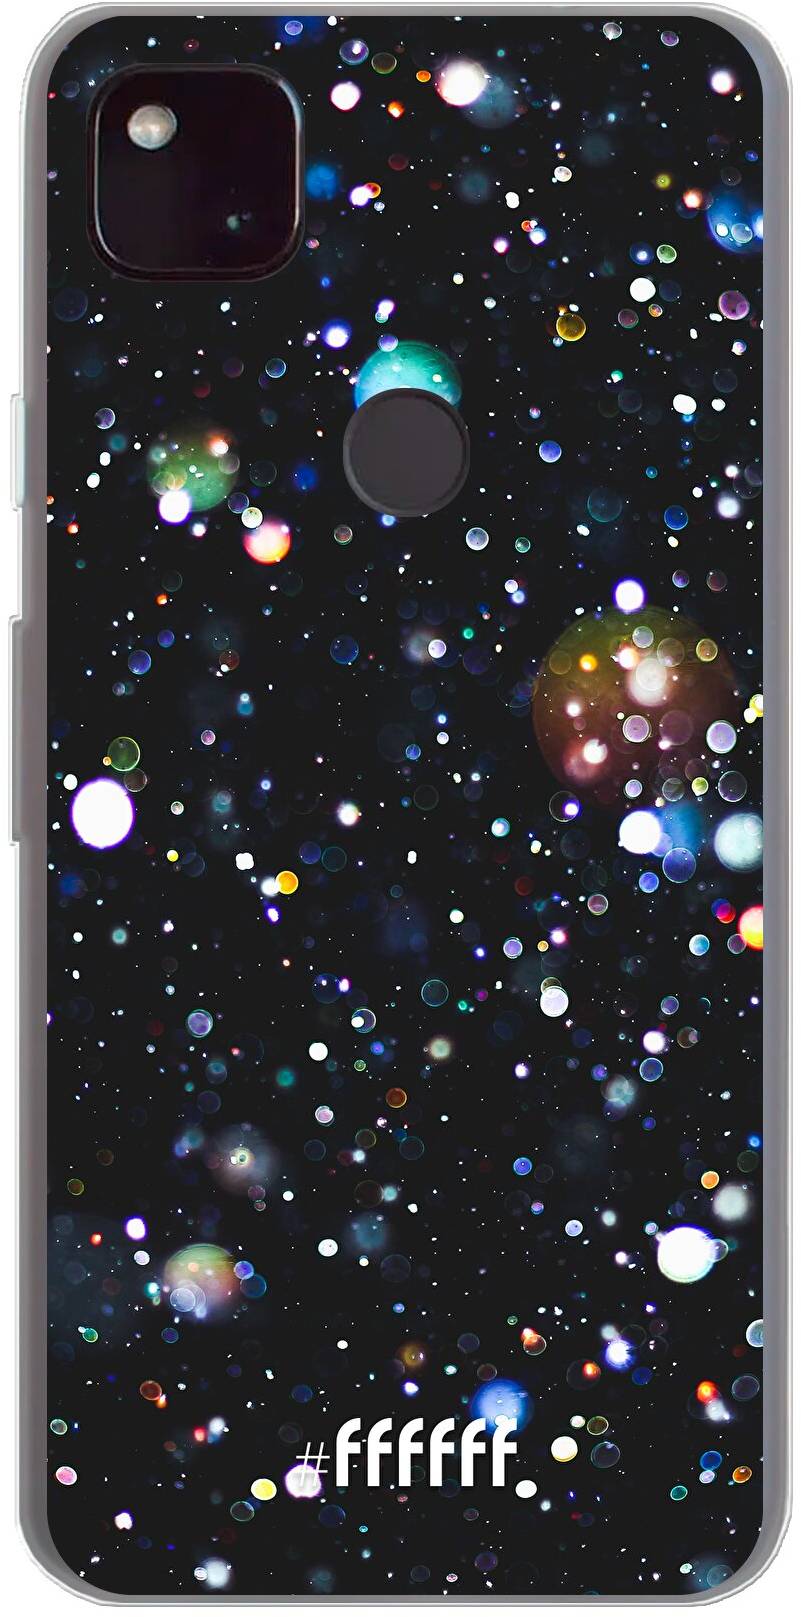 Galactic Bokeh Pixel 4a 5G